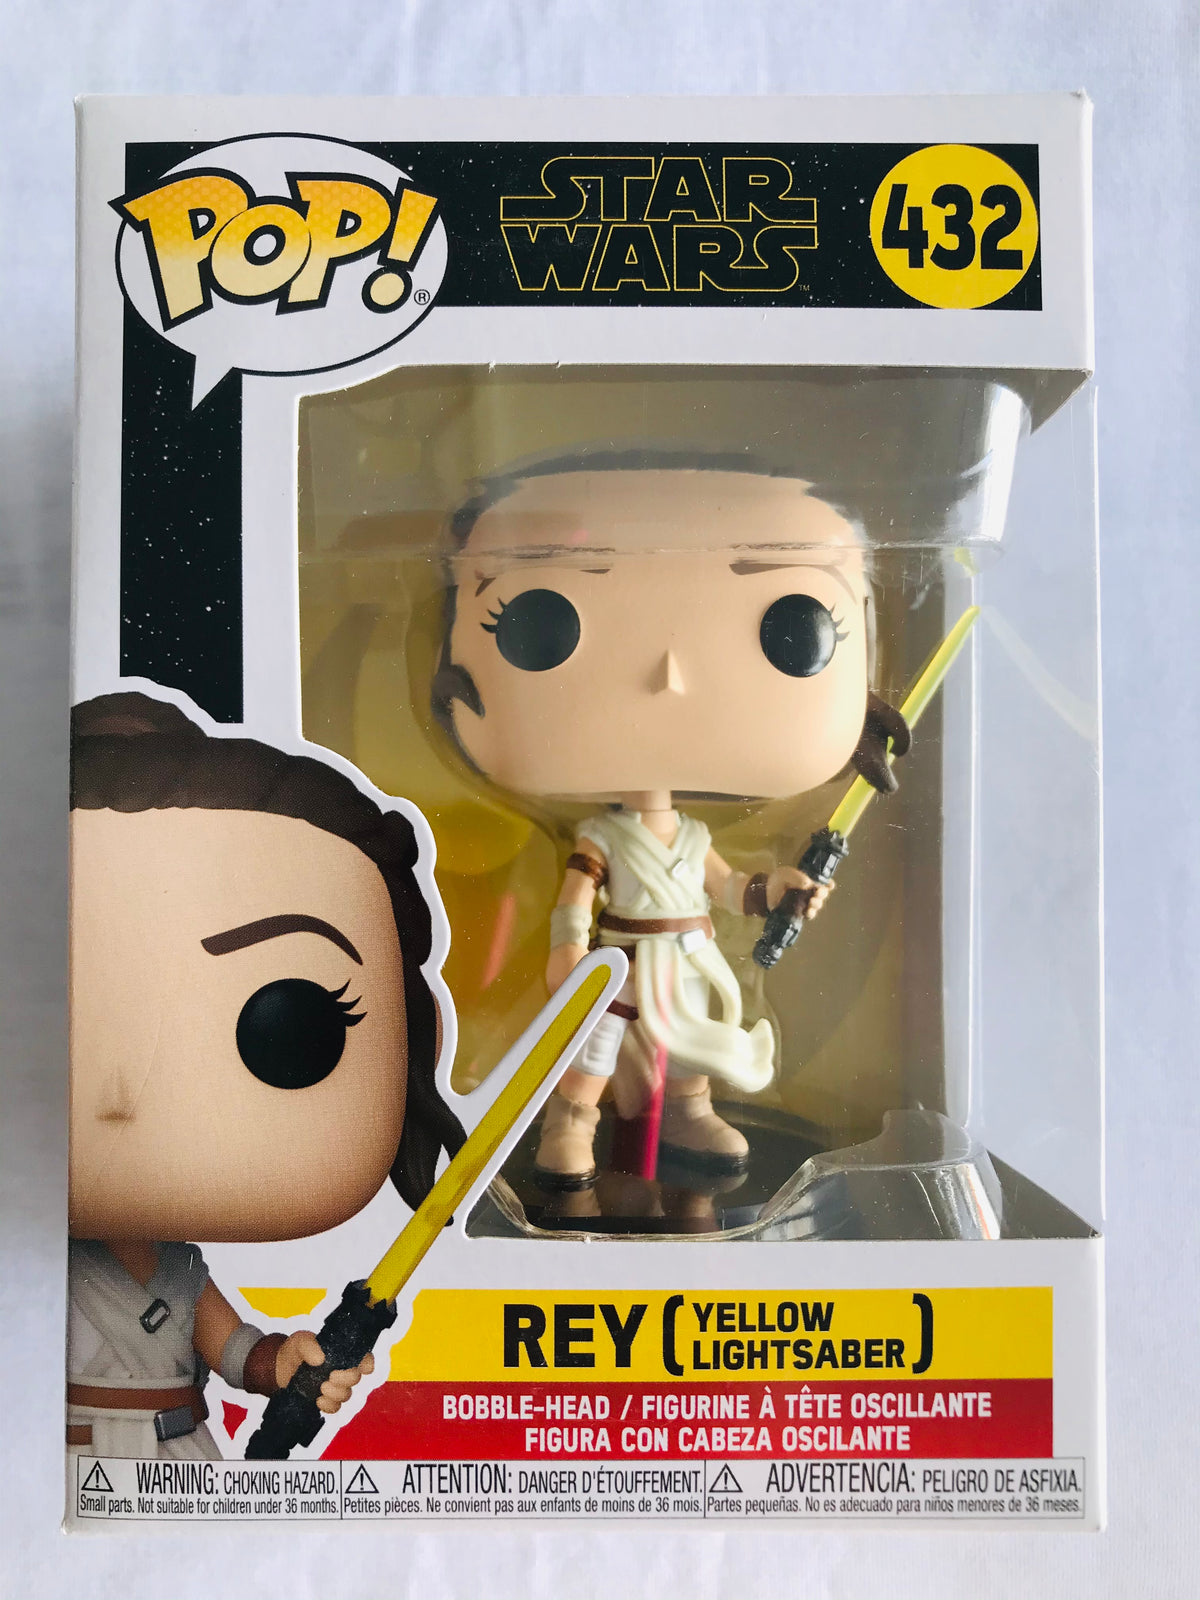 Rey (Yellow Lightsaber) (432)